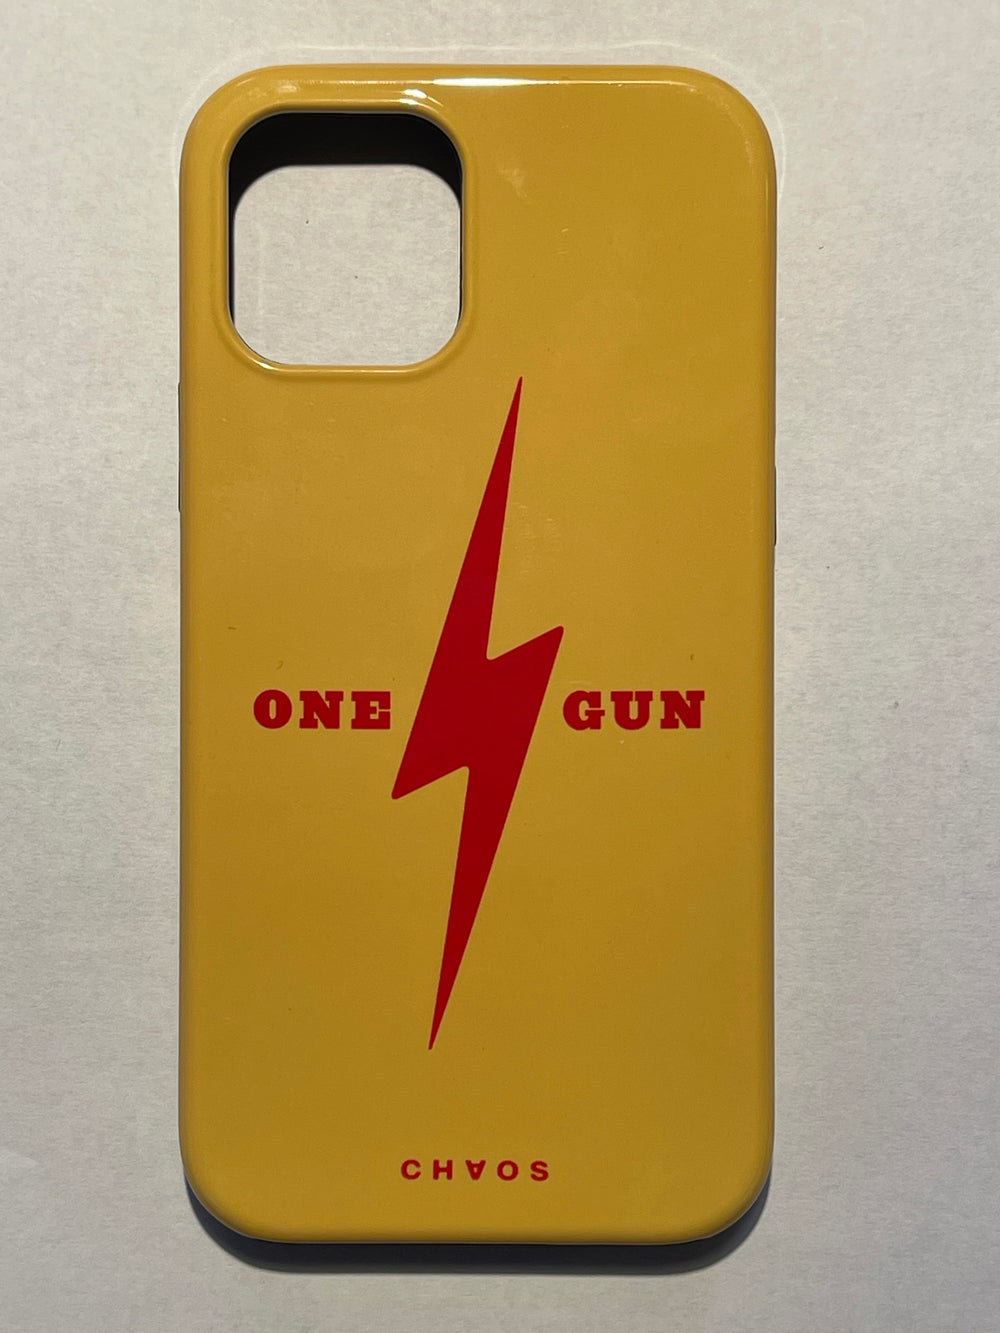 Chaos x One Gun Plastic iPhone Cases